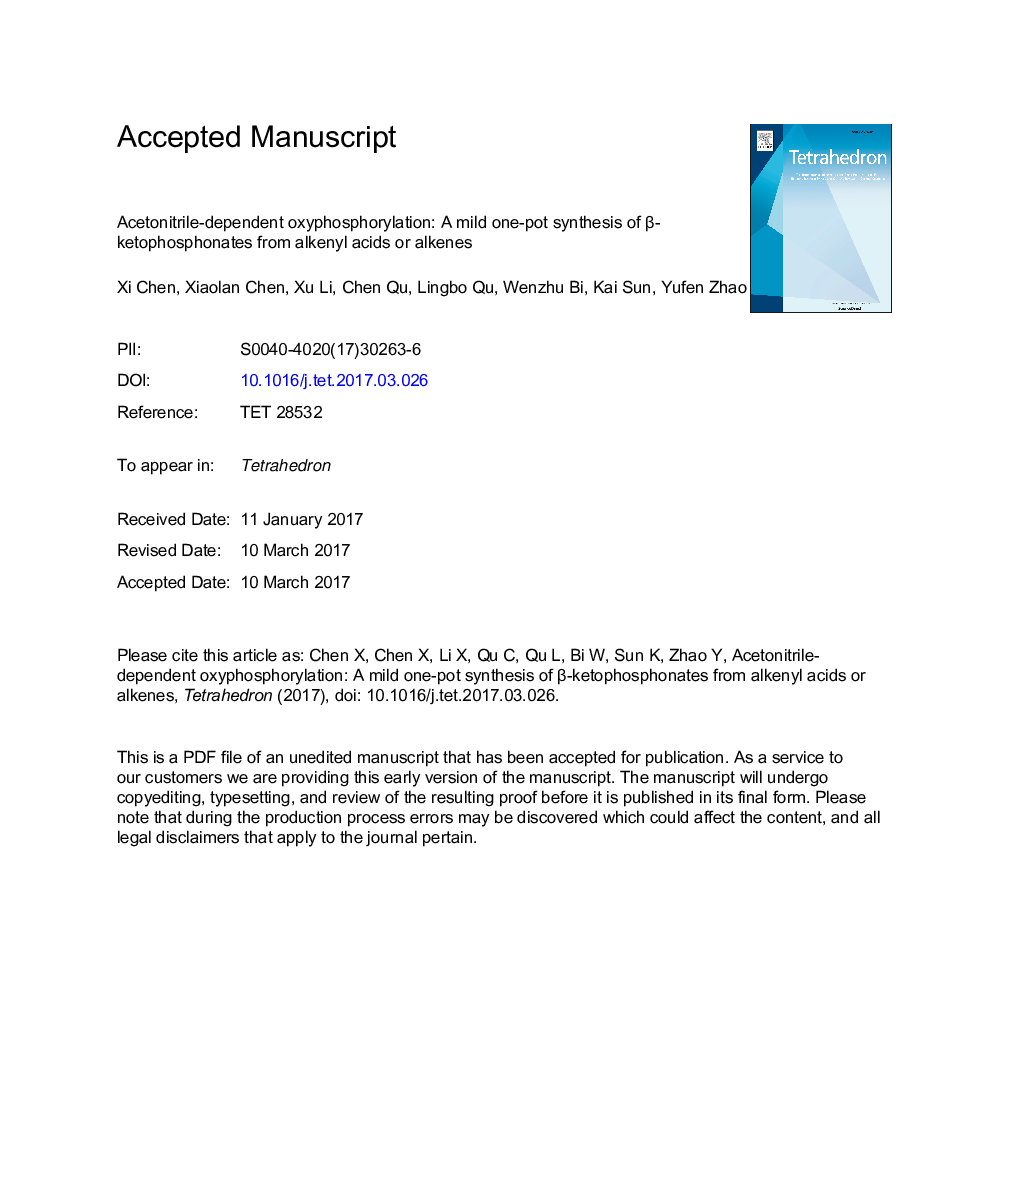 Acetonitrile-dependent oxyphosphorylation: A mild one-pot synthesis of Î²-ketophosphonates from alkenyl acids or alkenes